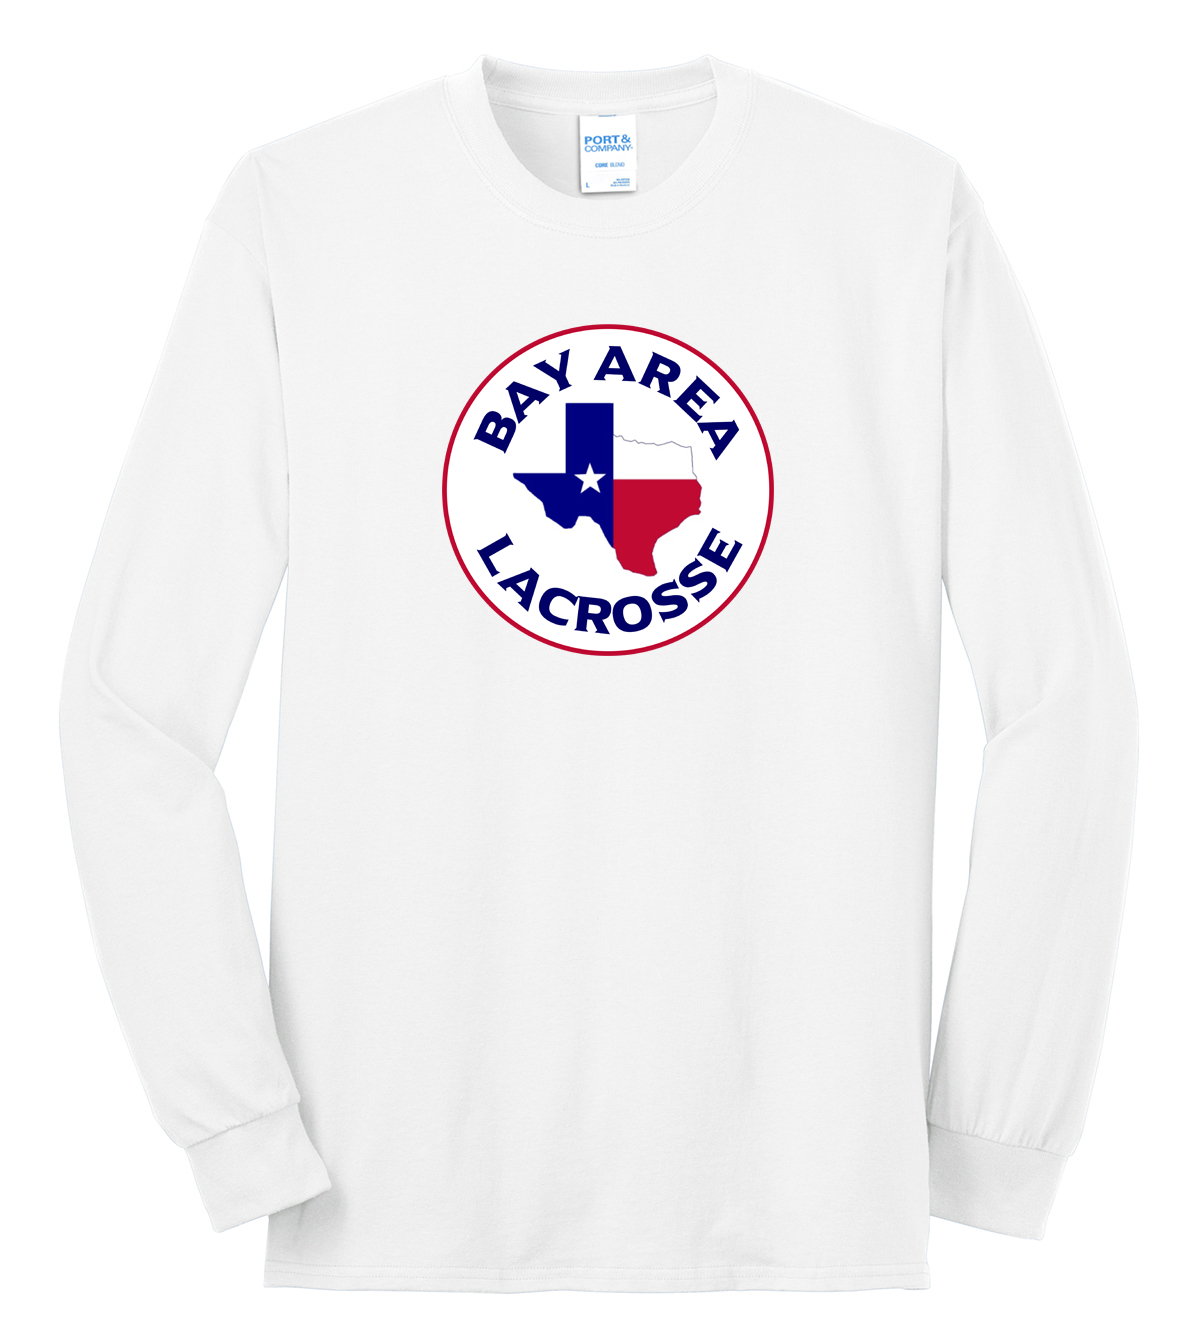 Bay Area Lacrosse White Long Sleeve T-Shirt